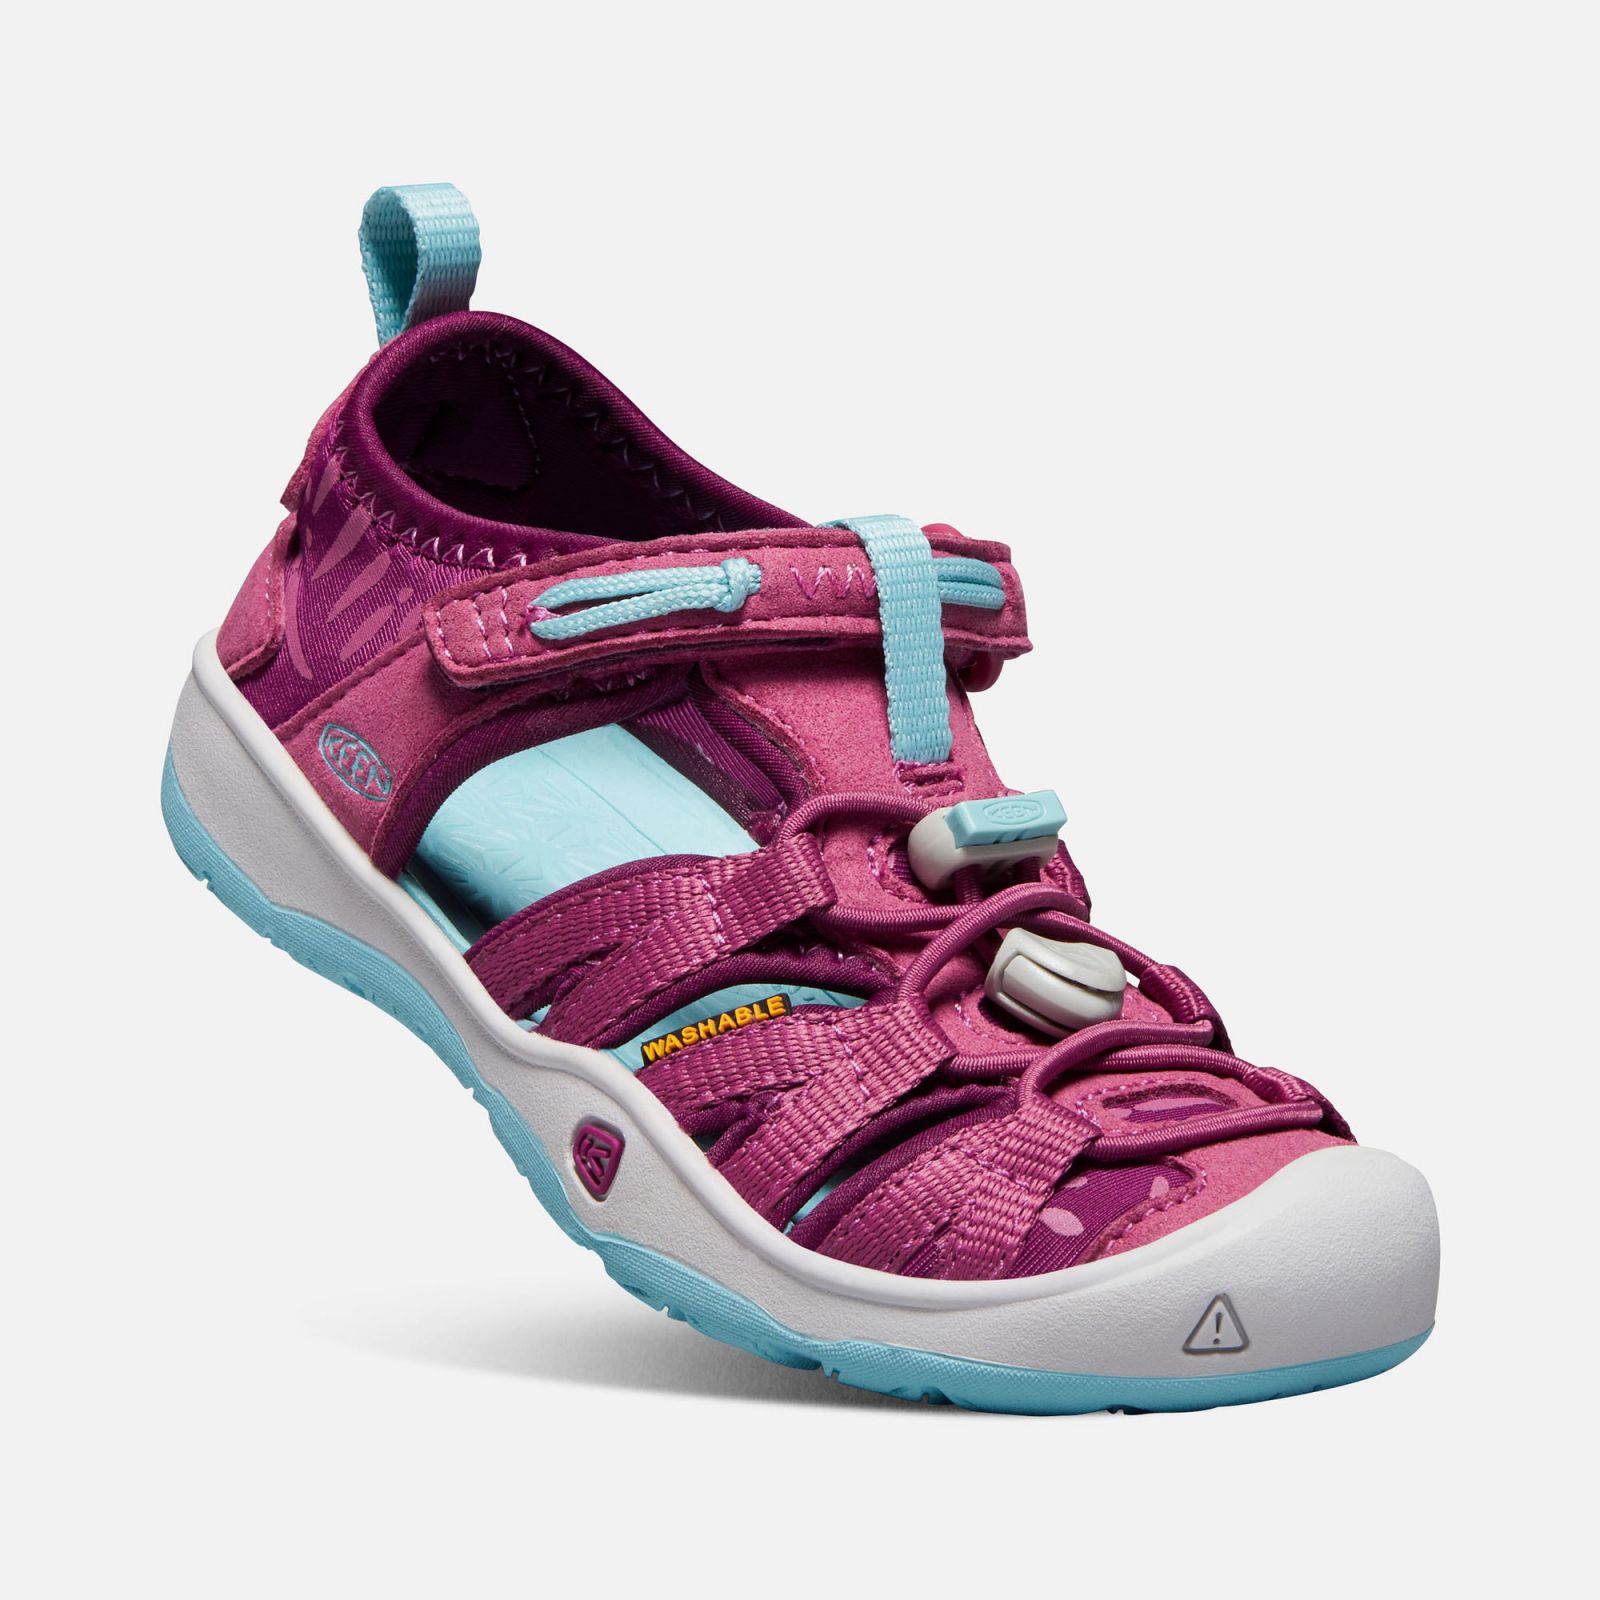 KEEN Moxie Sandal JR Red violet / Pastel turquoise Dívčí sandál - 38